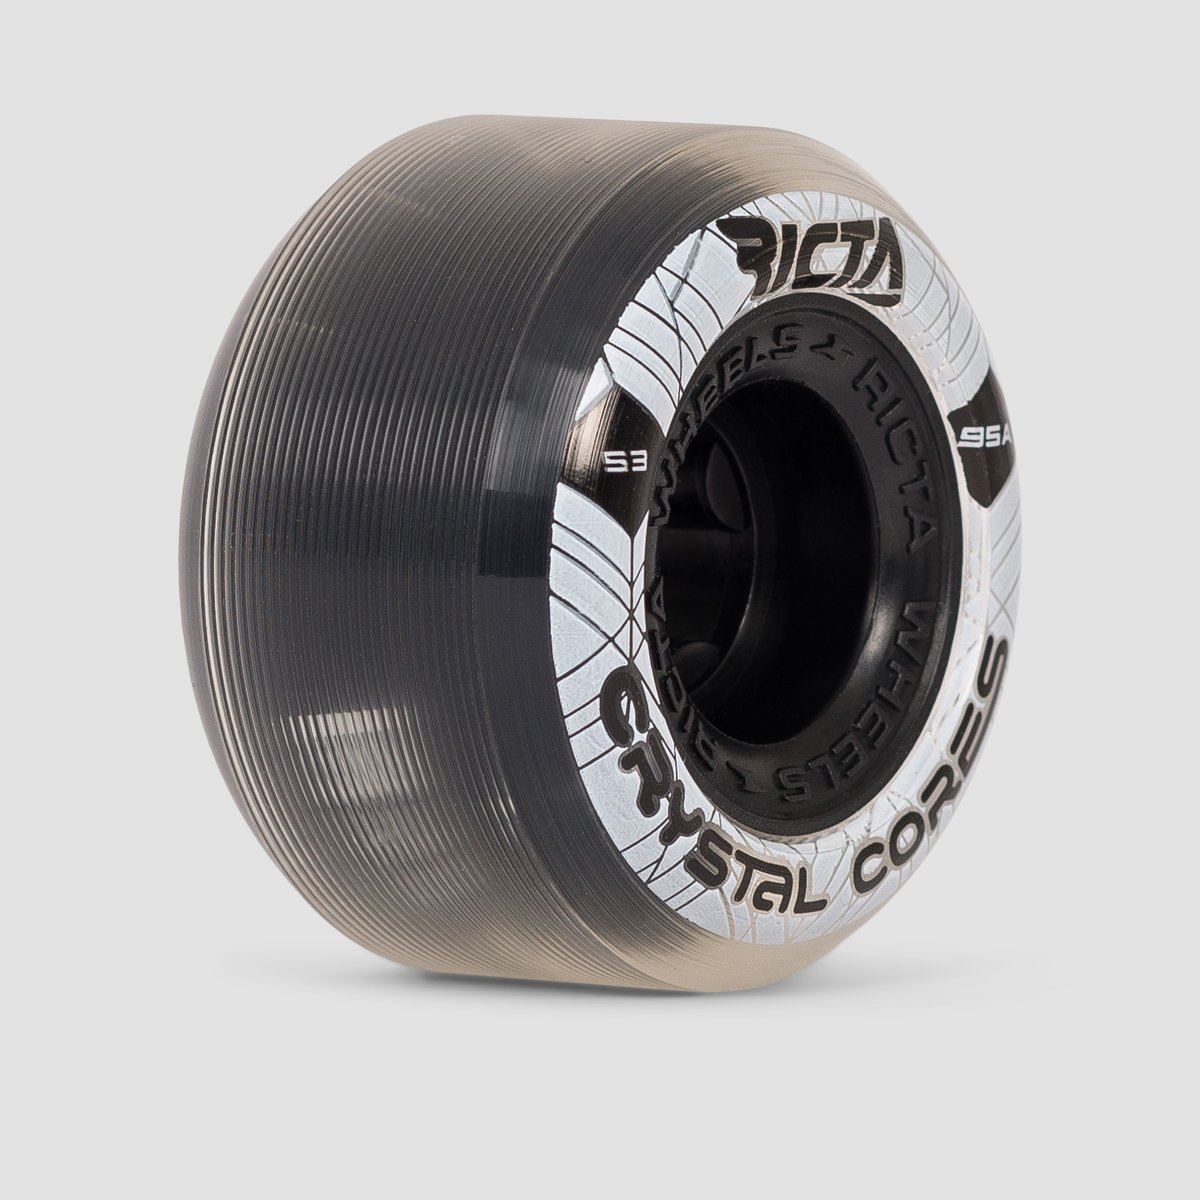 Ricta Crystal Cores 95a Skateboard Wheels 53mm